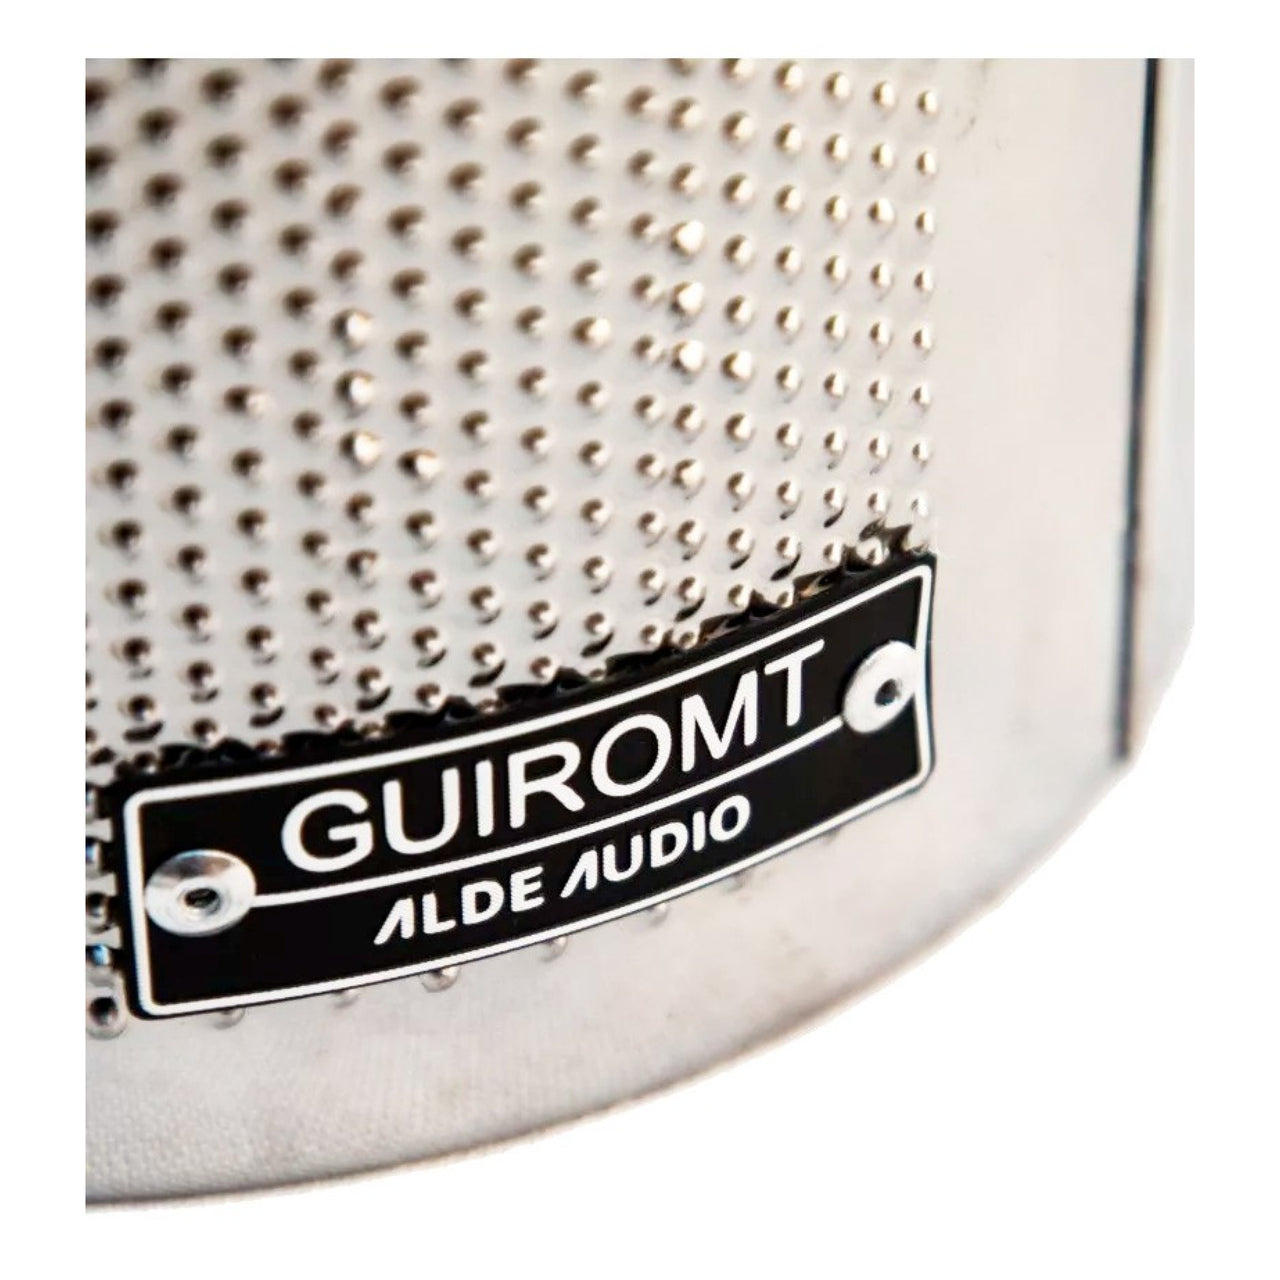 Guiro Alde Audio Guiromt124  Metalico 12x4 Pulgadas Con Raspador